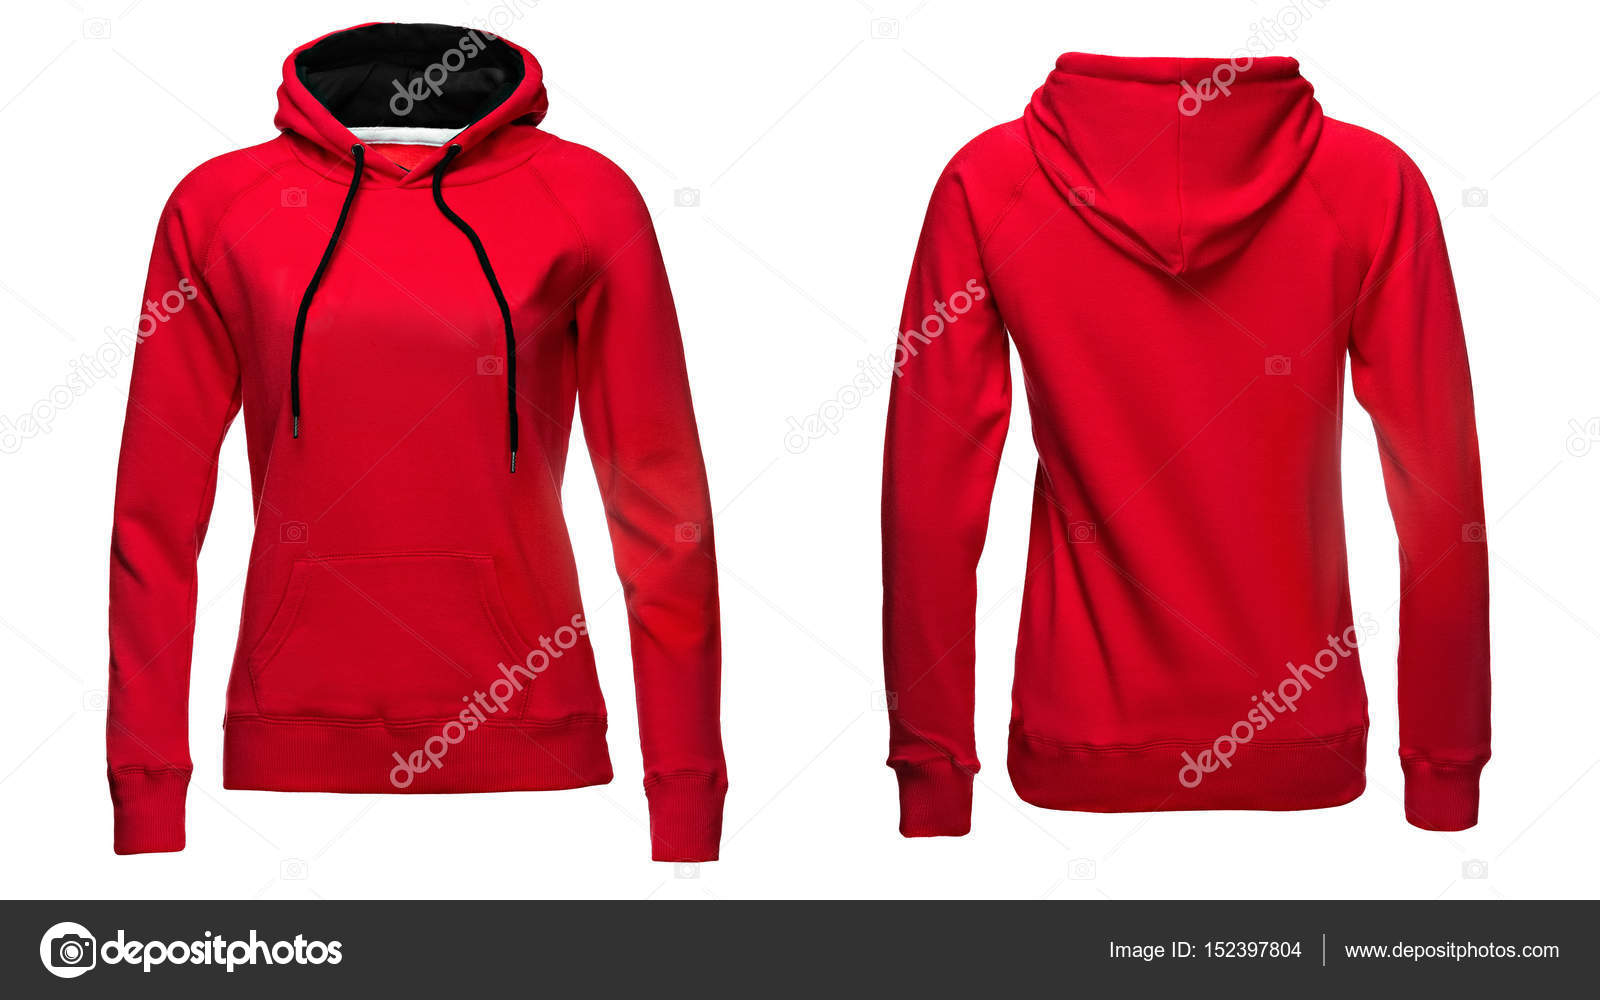 Download Red women's hoodies, sweatshirt mockup, isolated on white ...